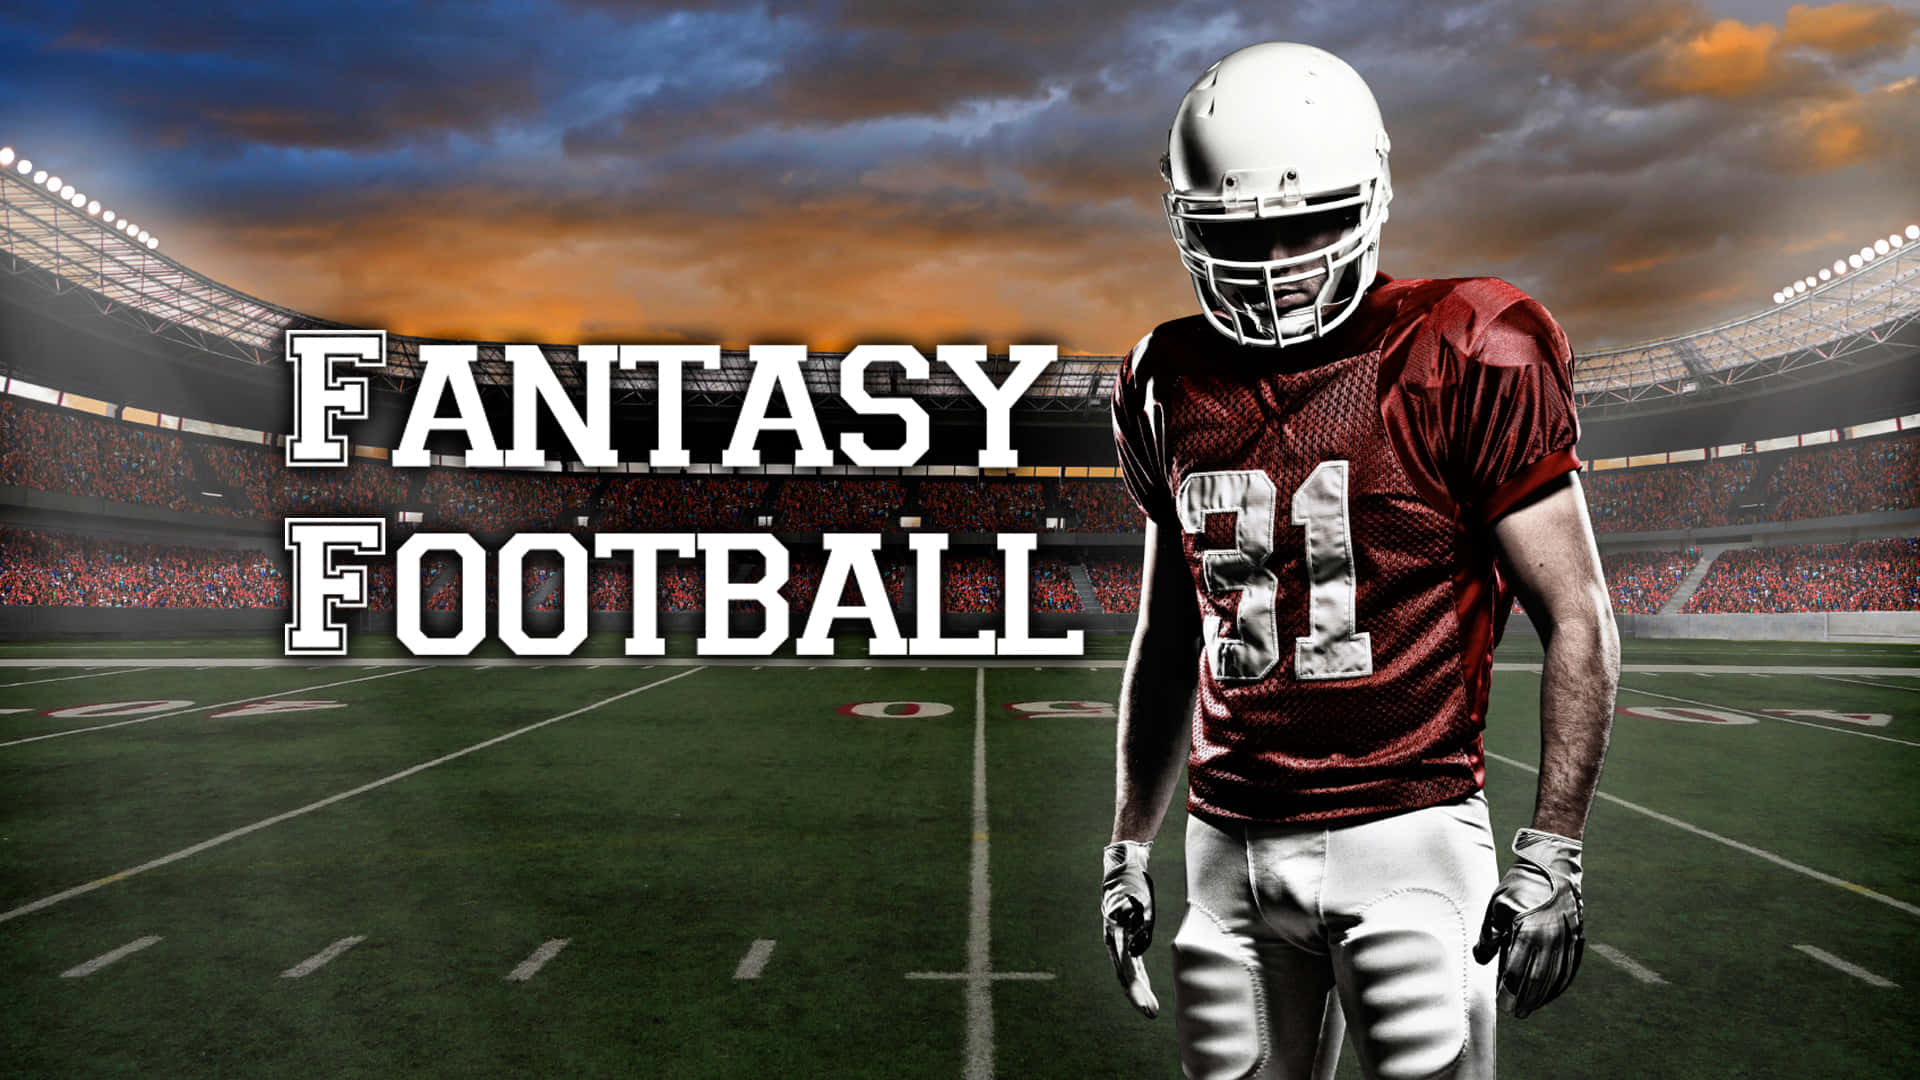 Fantasy Football - A Man In A Football Uniform Wallpaper